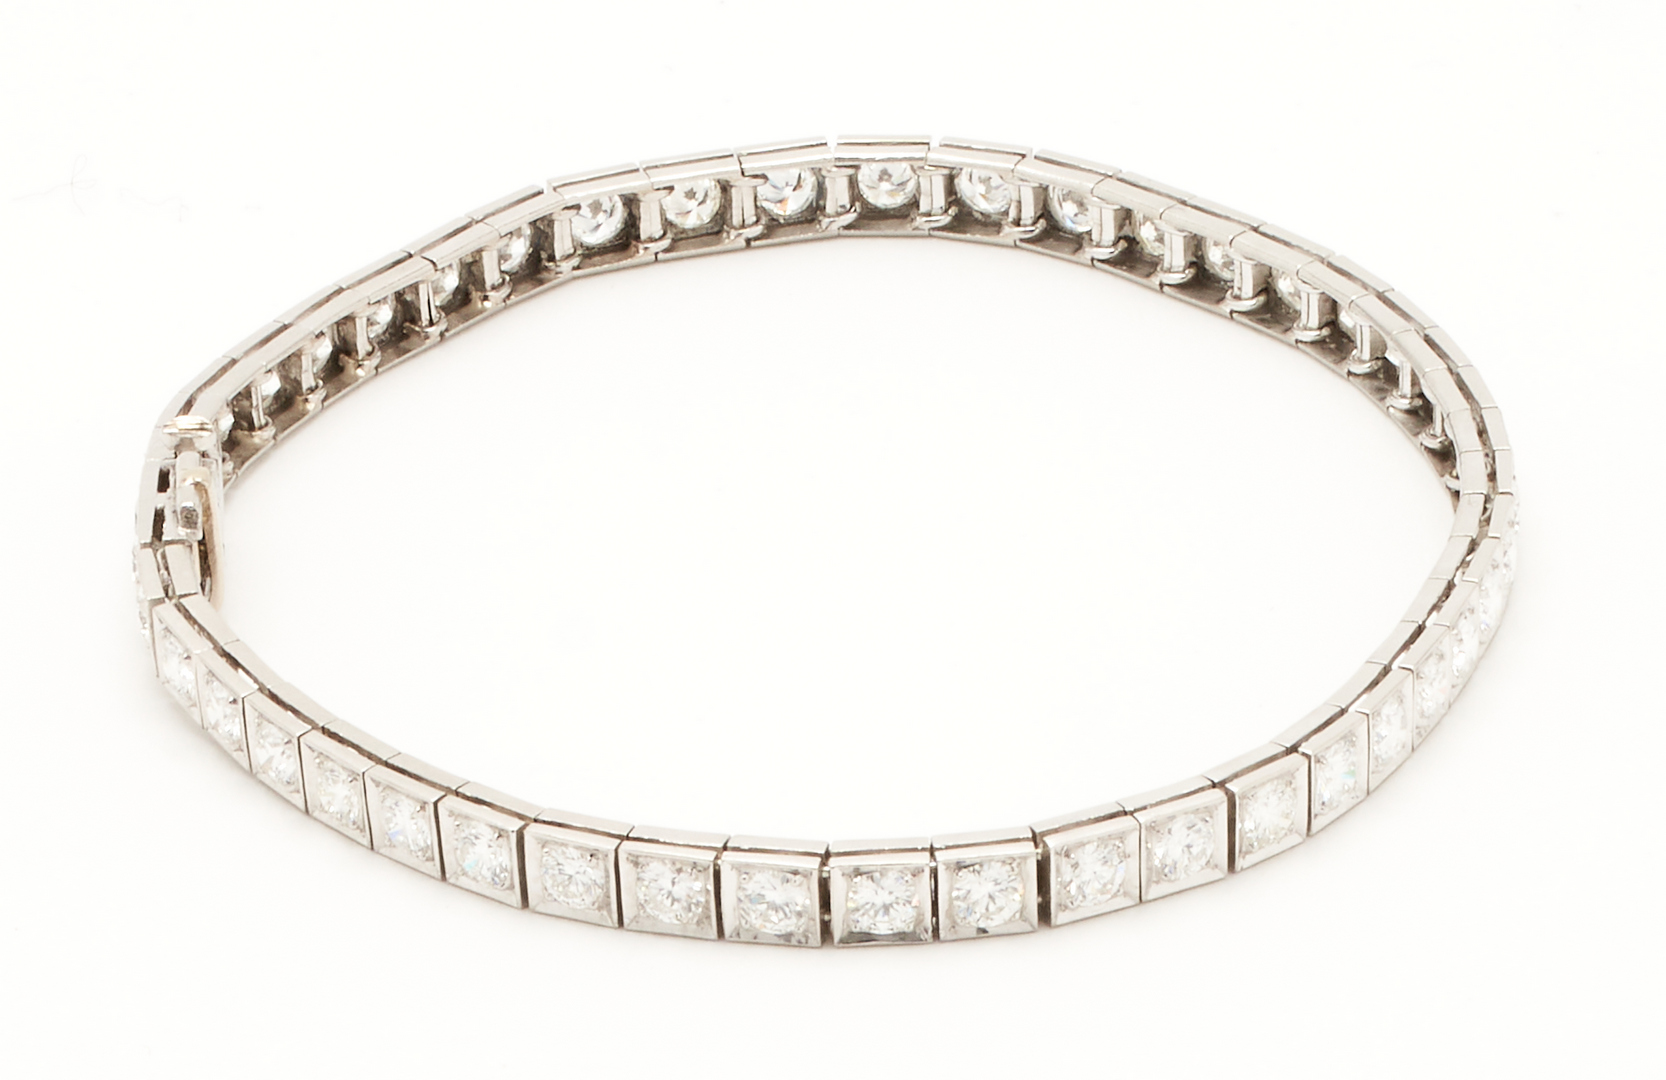 Lot 69: Ladies Platinum & Diamond Line Bracelet, 5.52 Carats Total